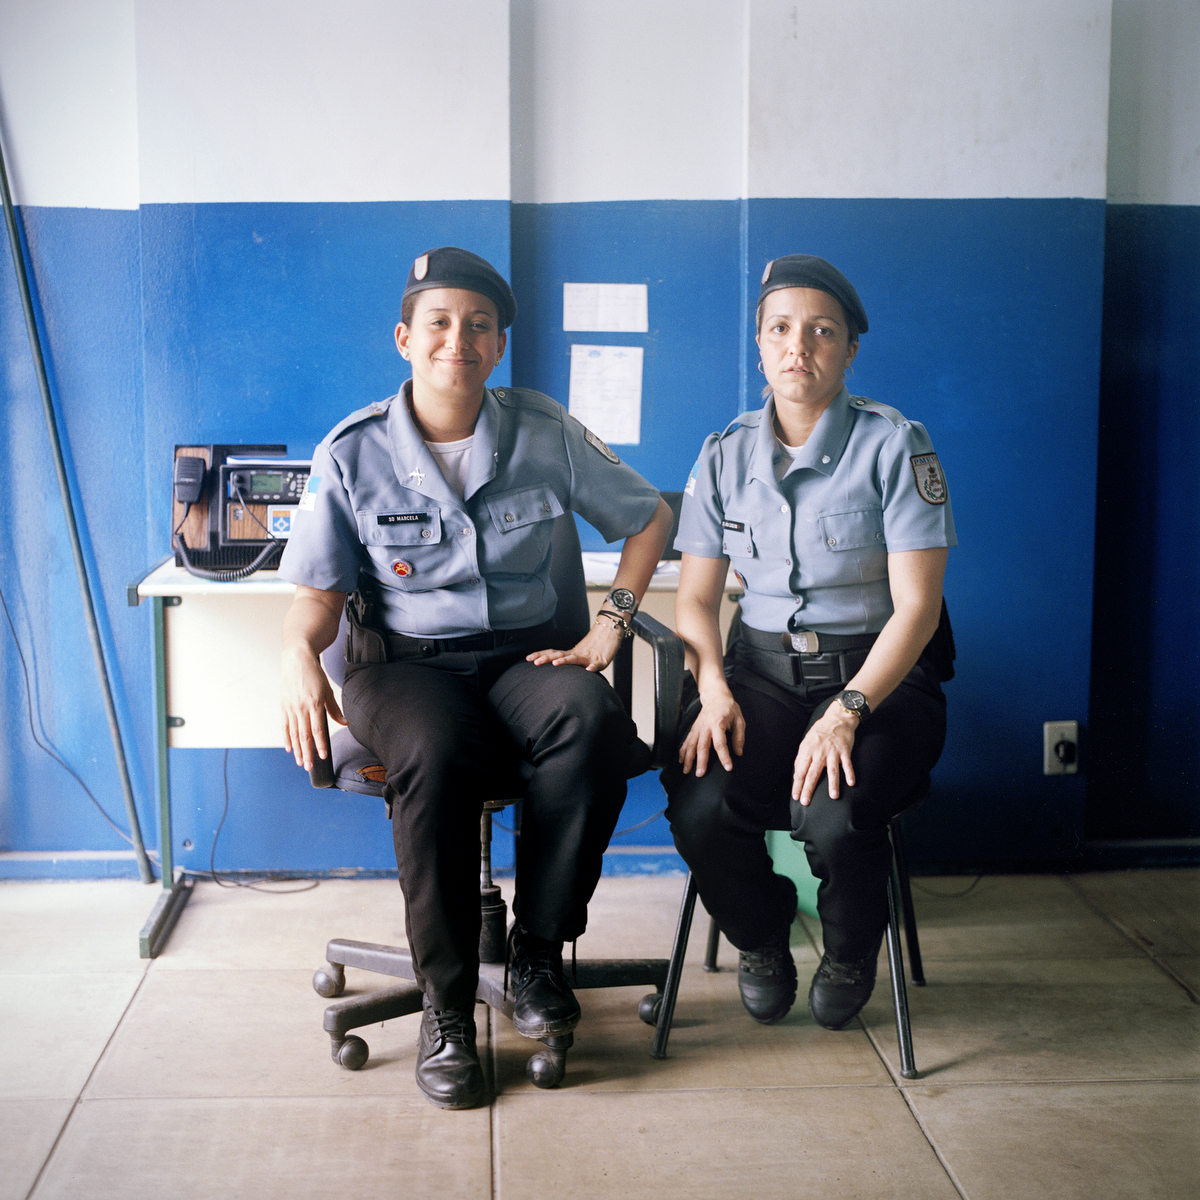 Police officers Marceba Gomes, 29, left, and Ana Carolina Braz, 32, right, dispatch of the Pacifying Police Unit (UPP), in Complexo do Caju, Rio de Janeiro, Brazil.